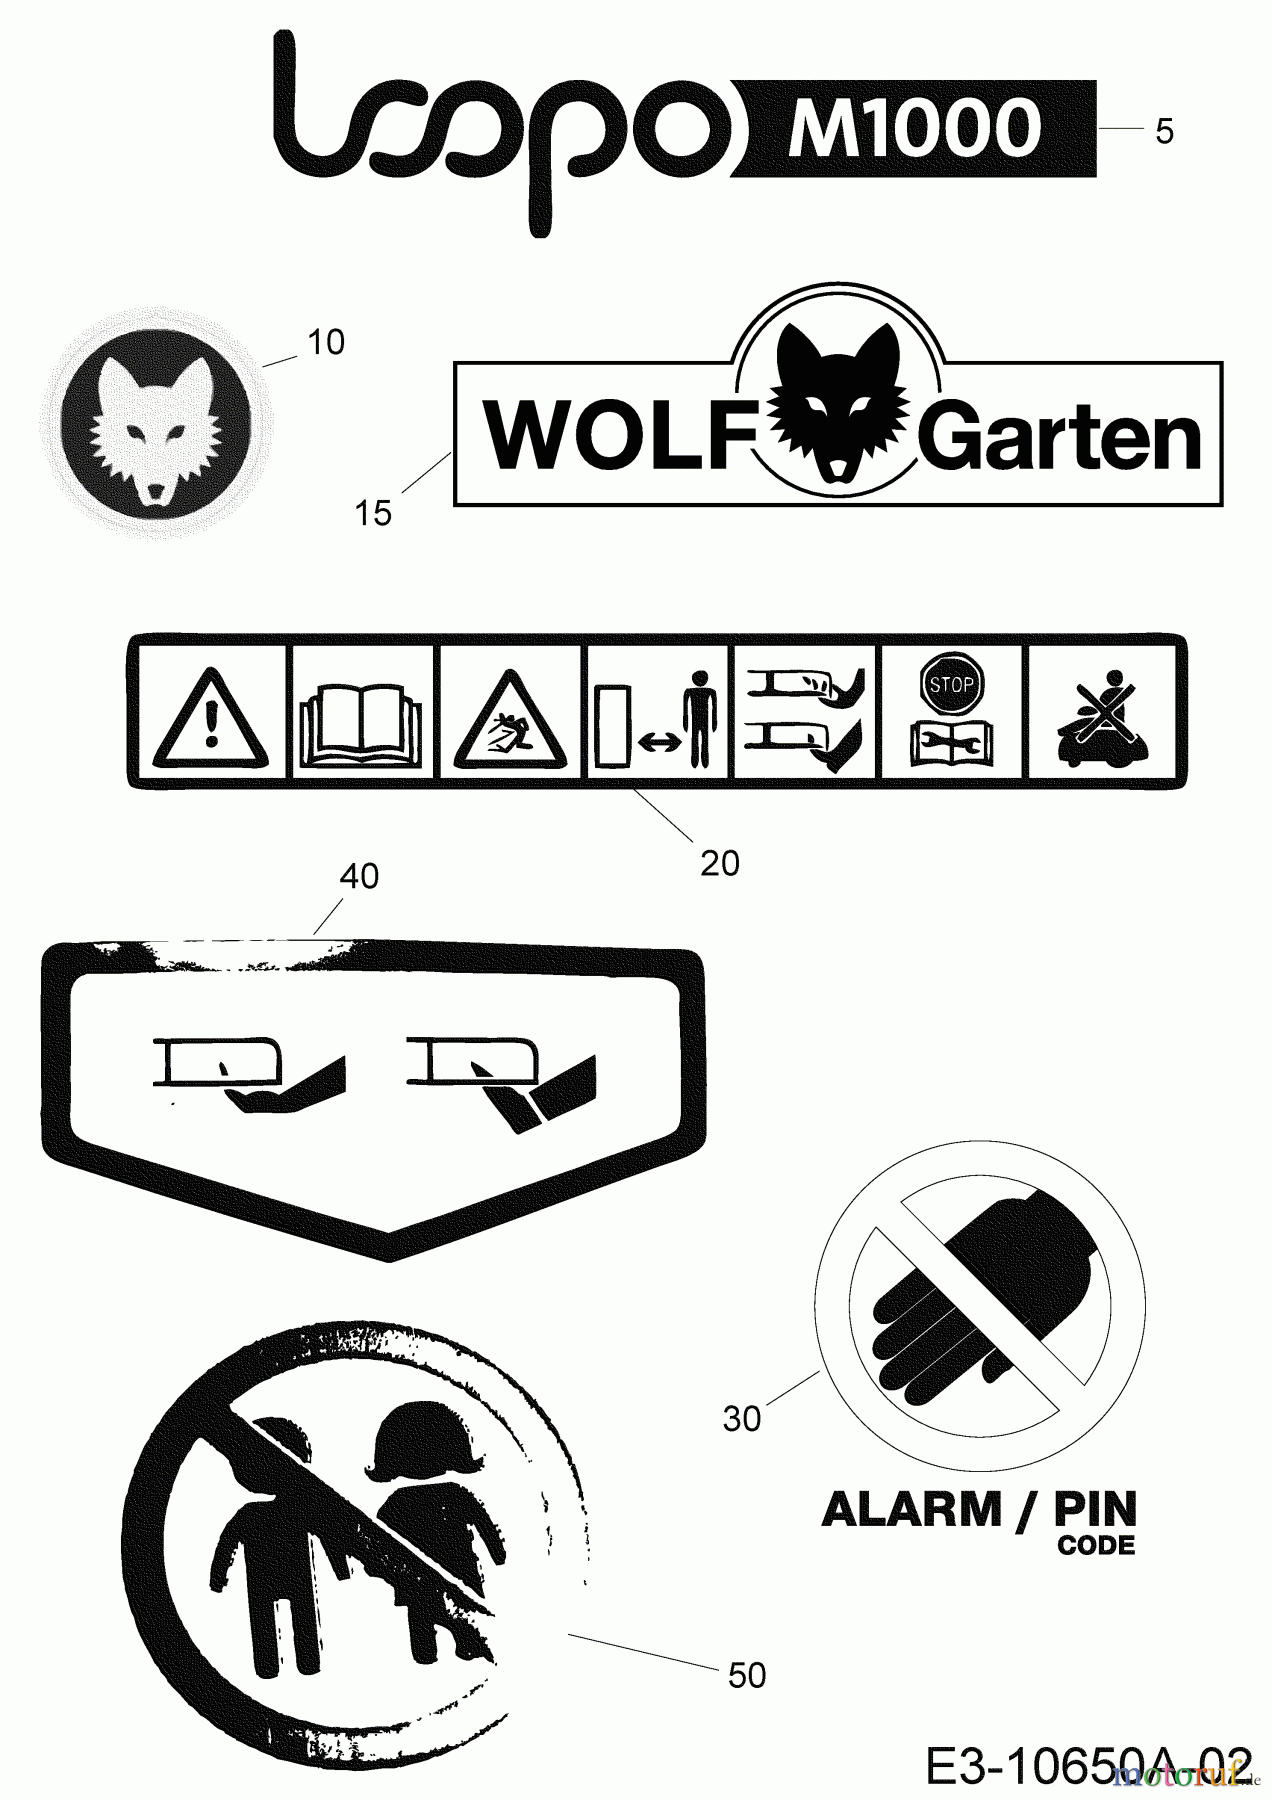  Wolf-Garten Robotic lawn mower Loopo M1000 22BCBA-A650 (2020) Labels